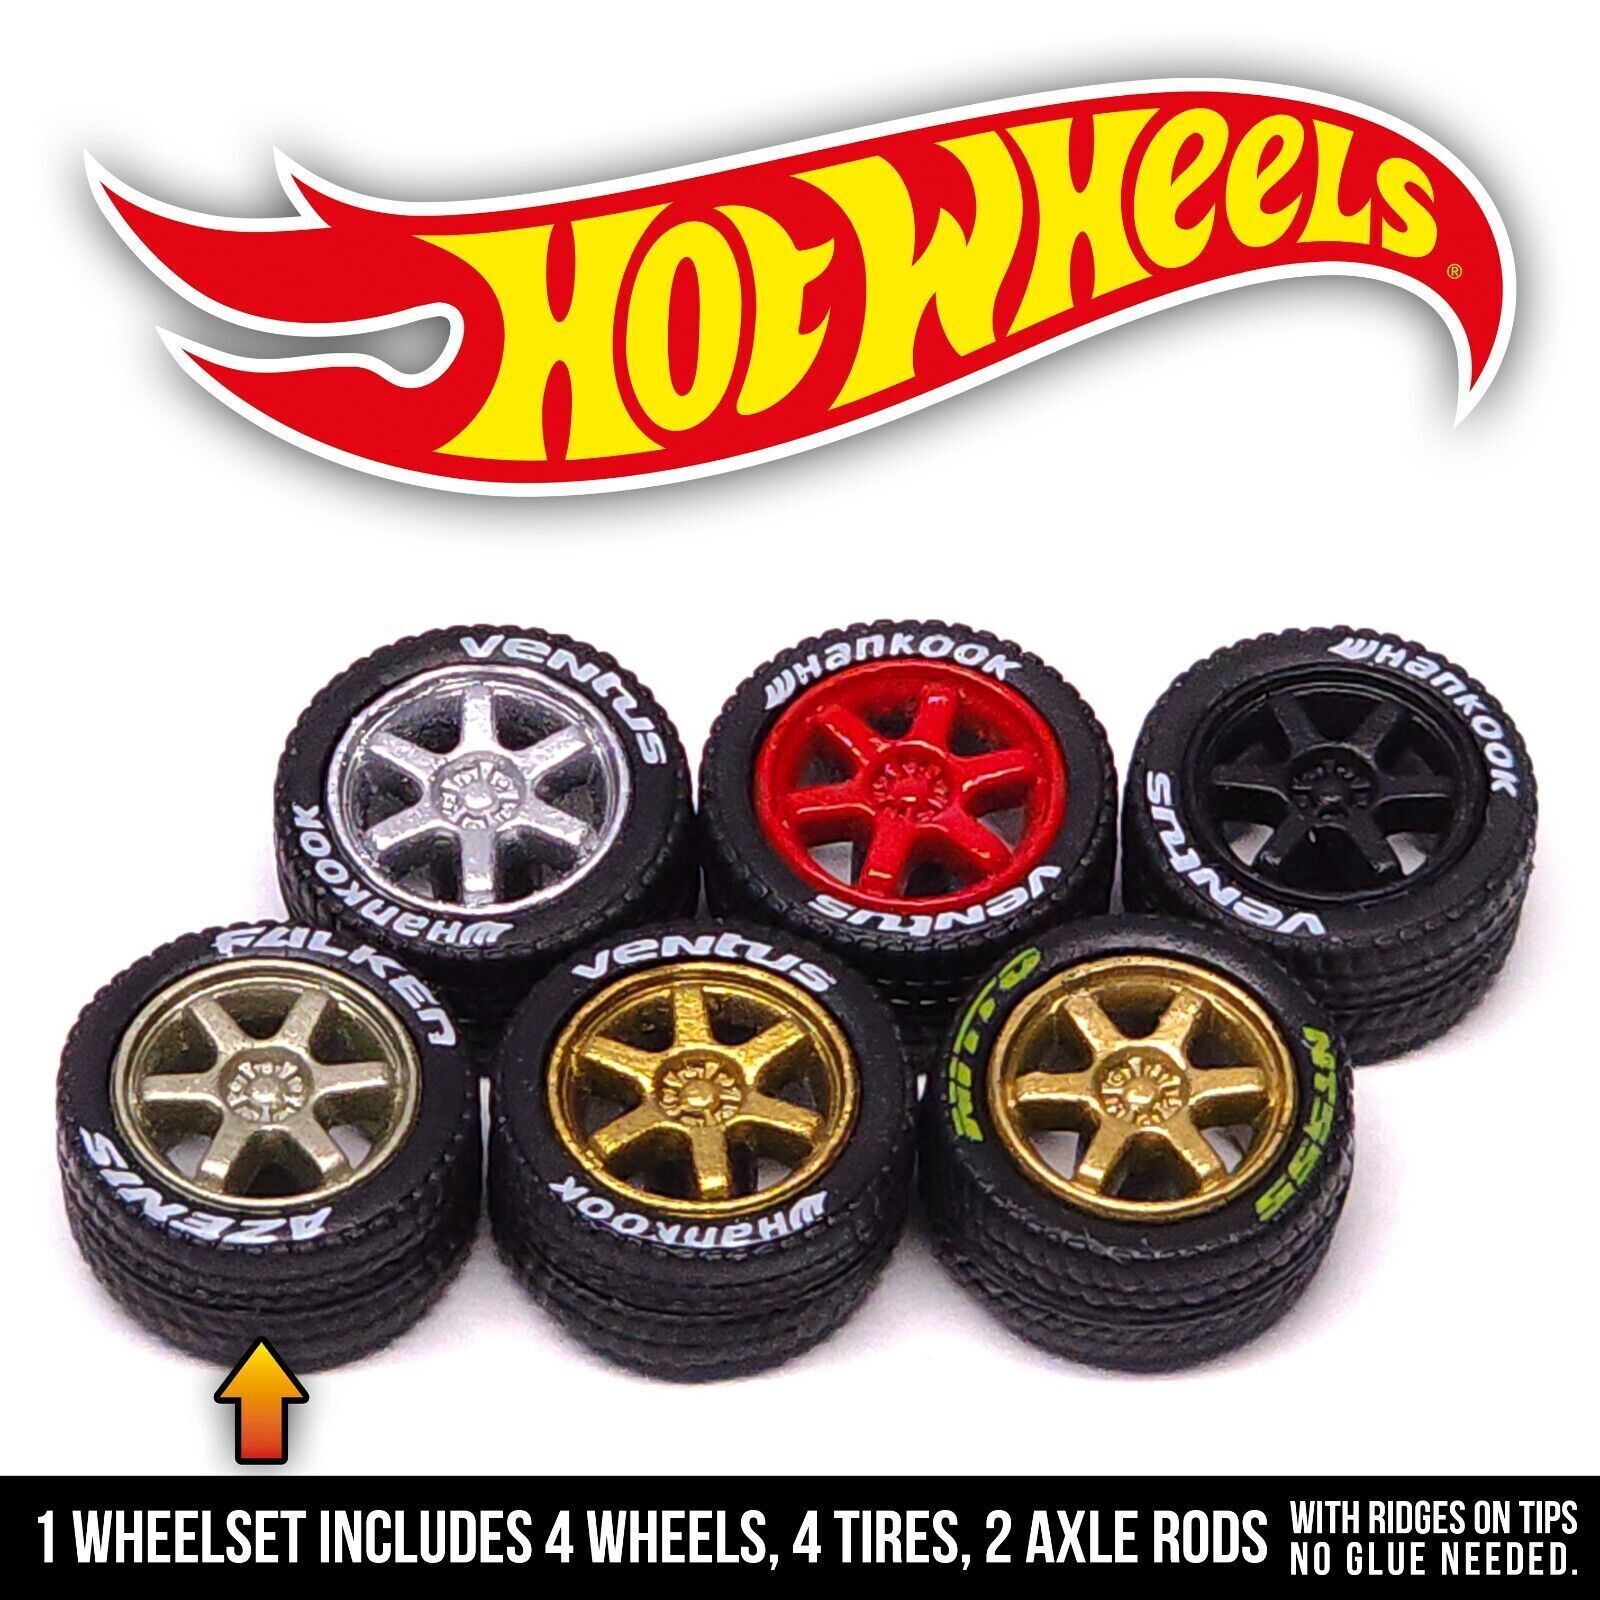 1/64 Scale 6 SPOKE TE37 v8 Real Riders Wheels Rims Tires Set for Hot Wheel